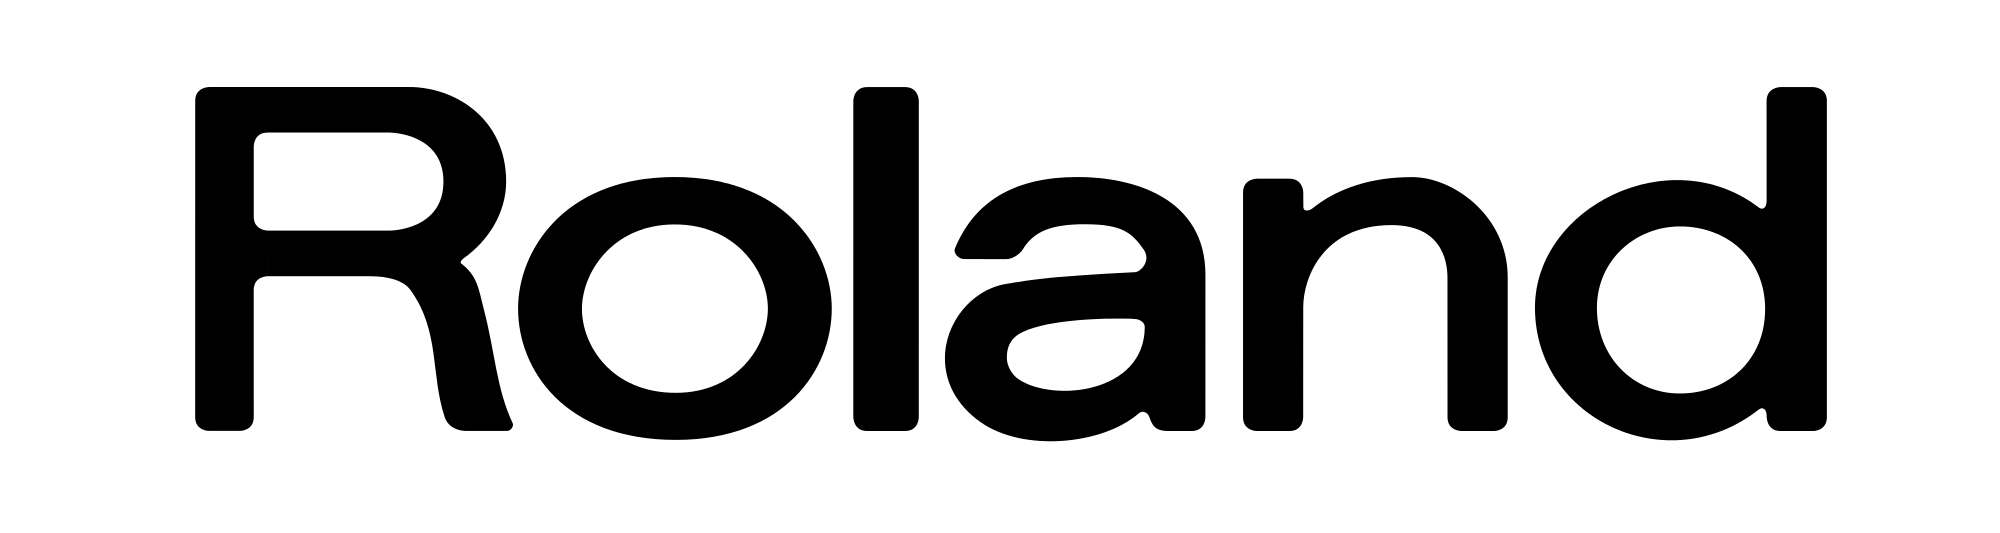 2000px-Roland_logo.svg.png